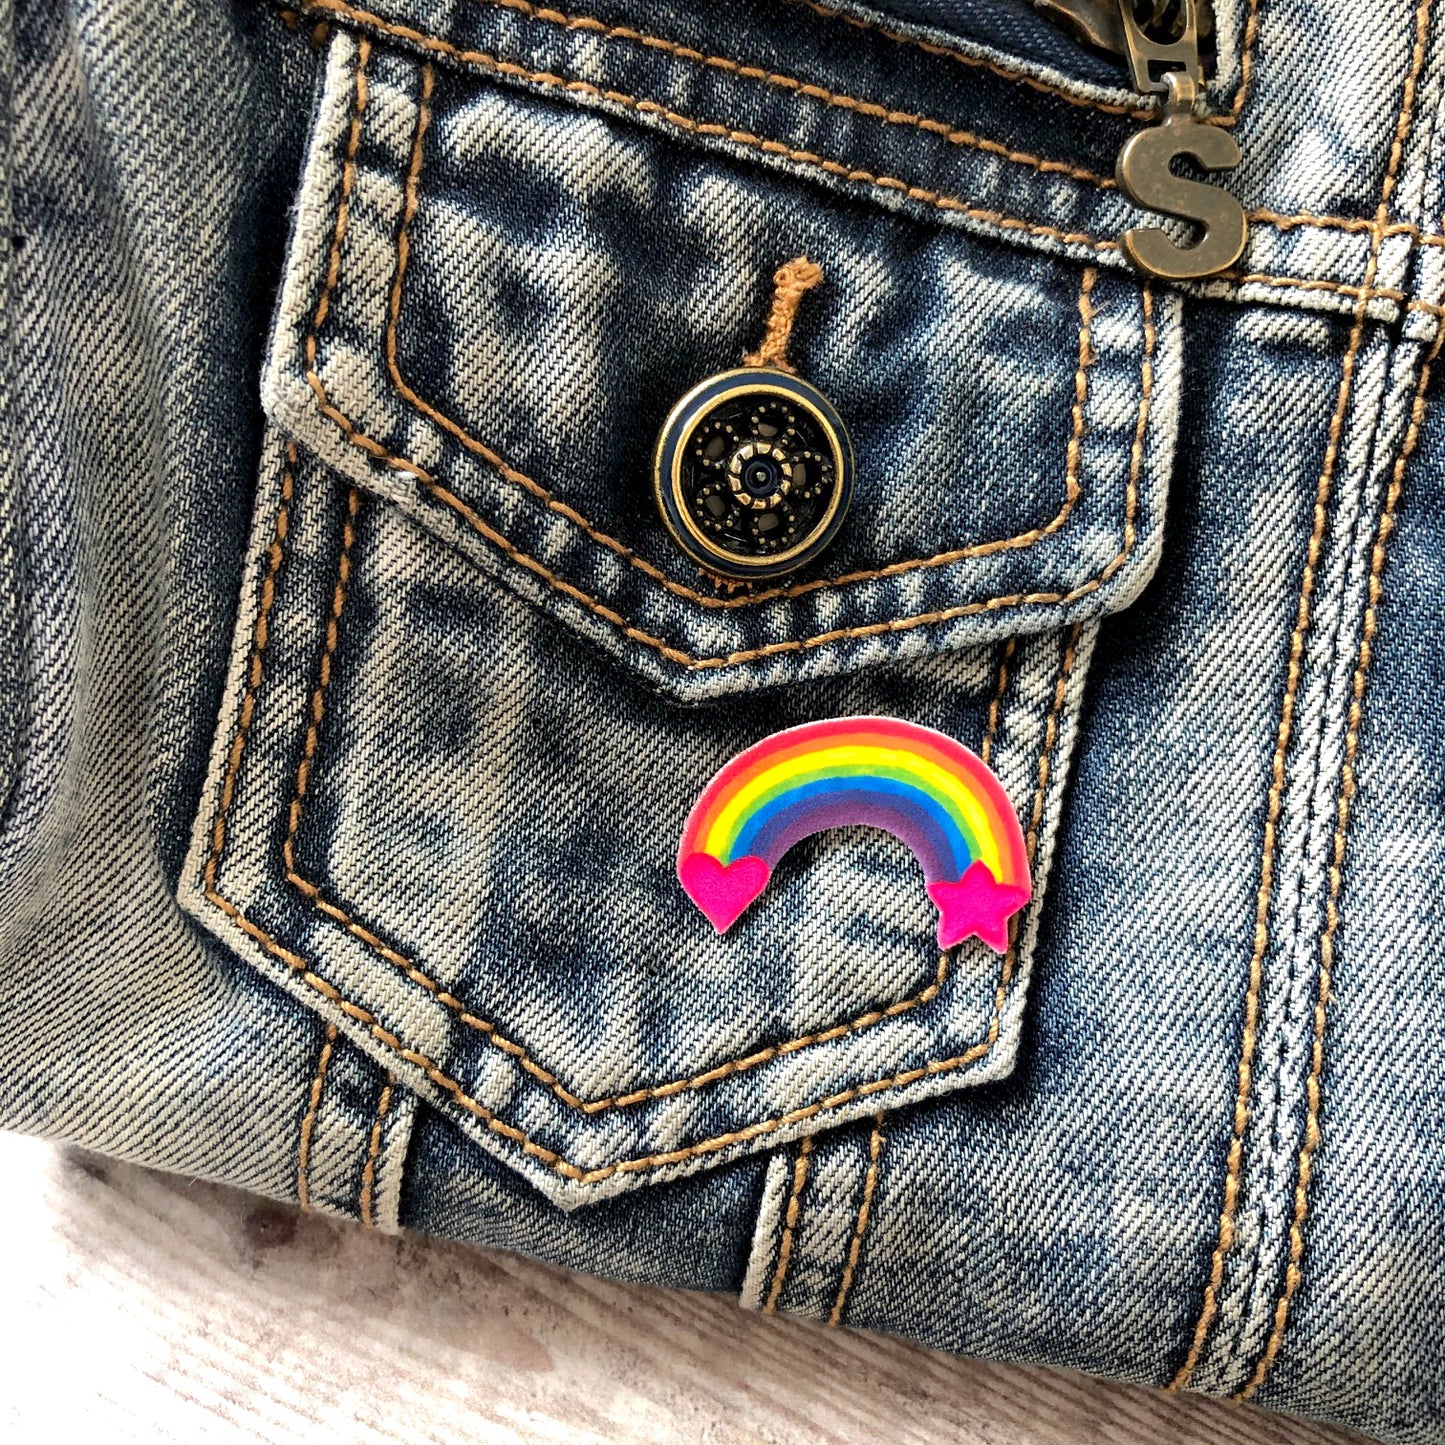 Rainbow mini pin badge - Rainbow stripes - Letterbox gift